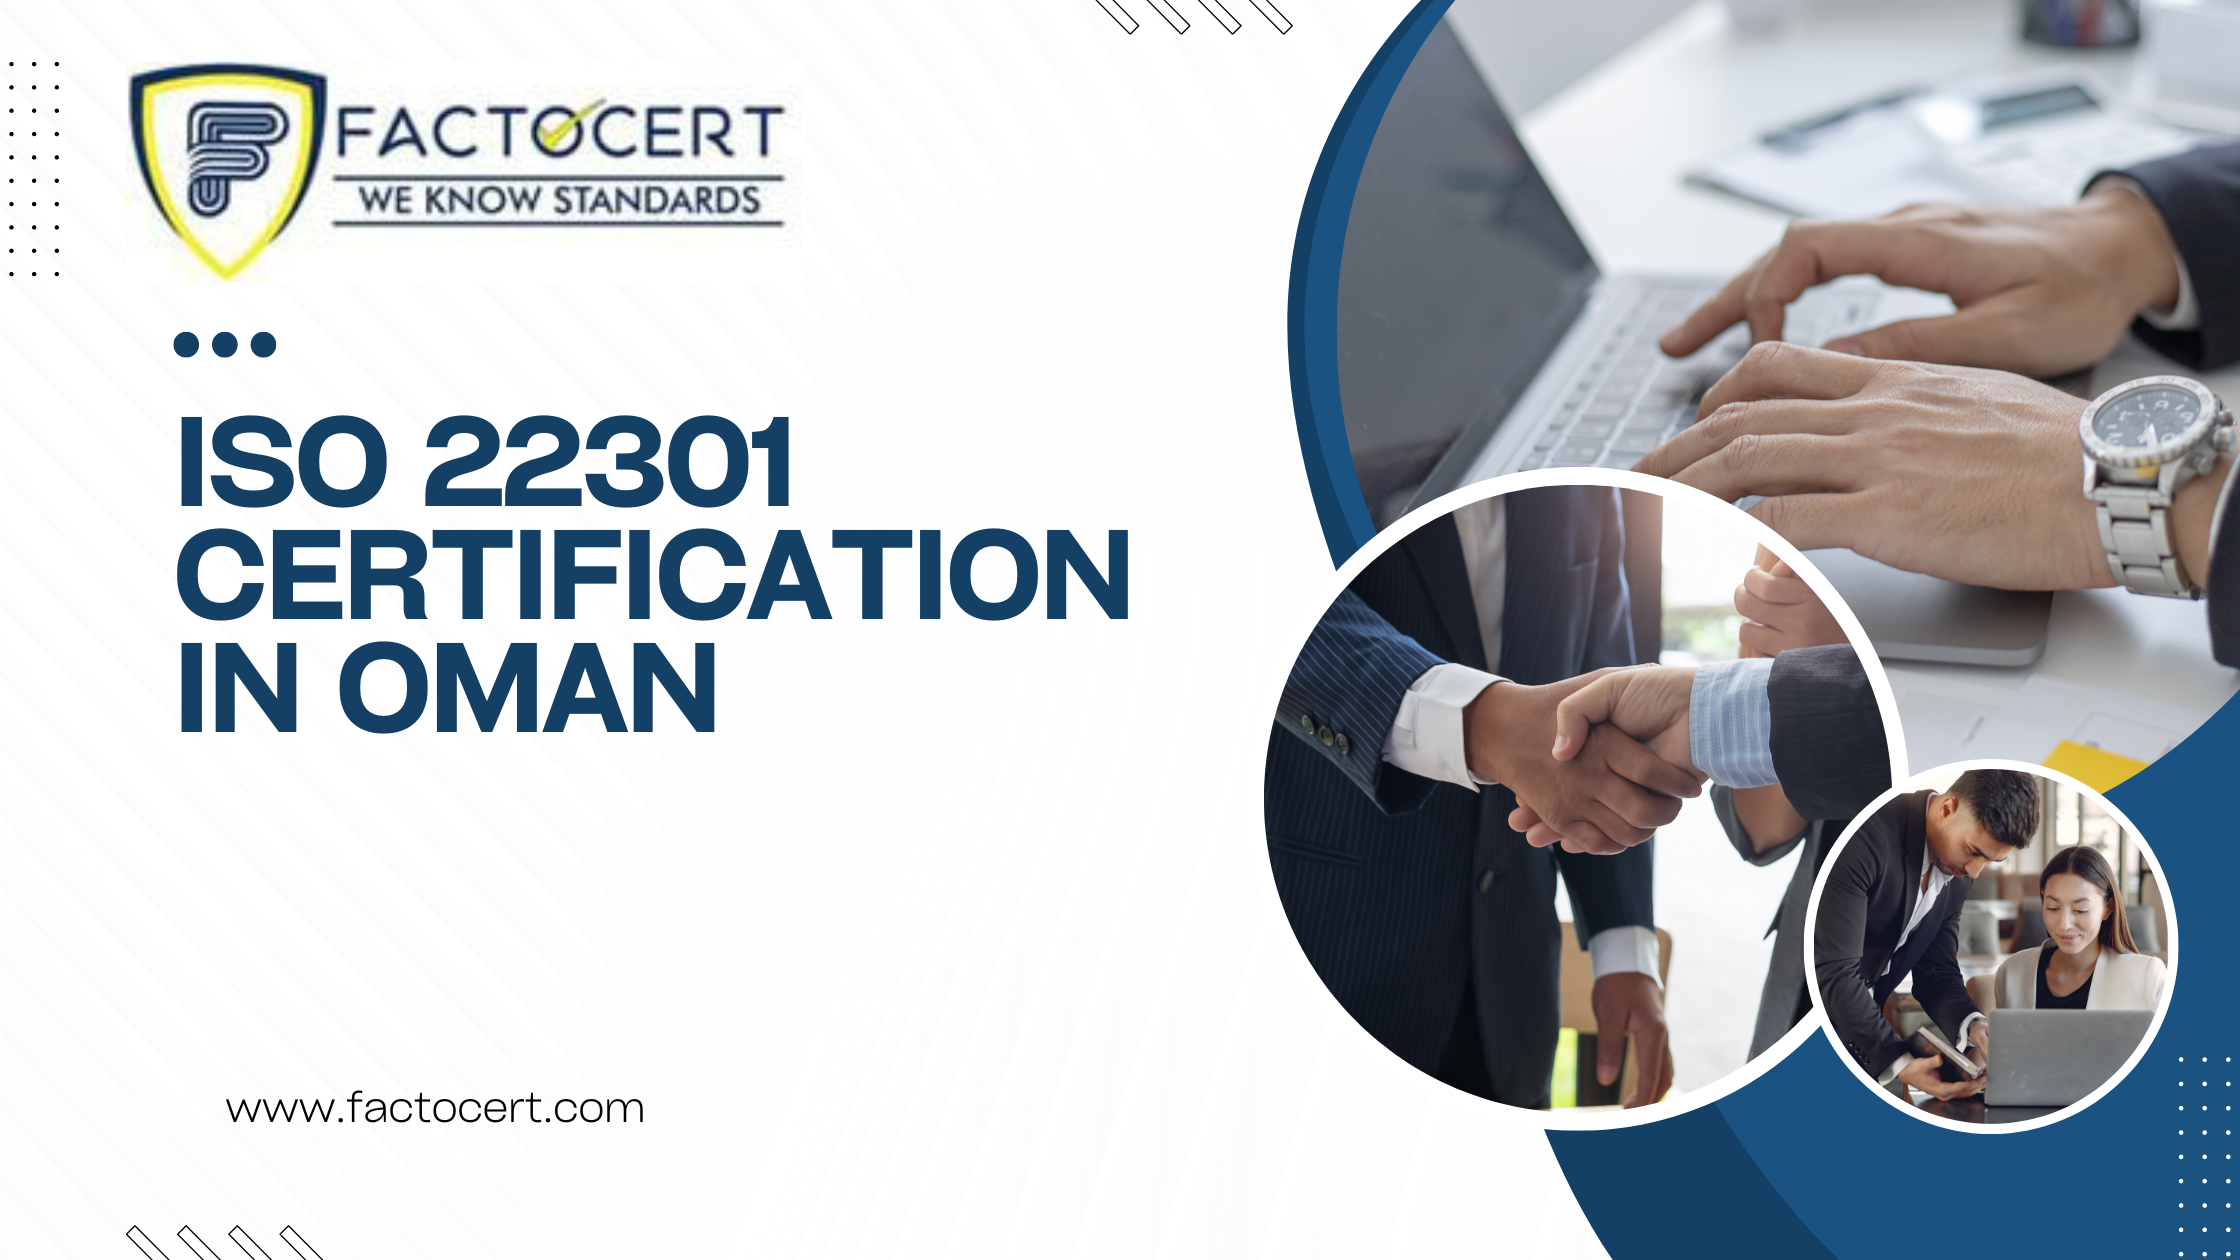 ISO 22301 Certification in Oman